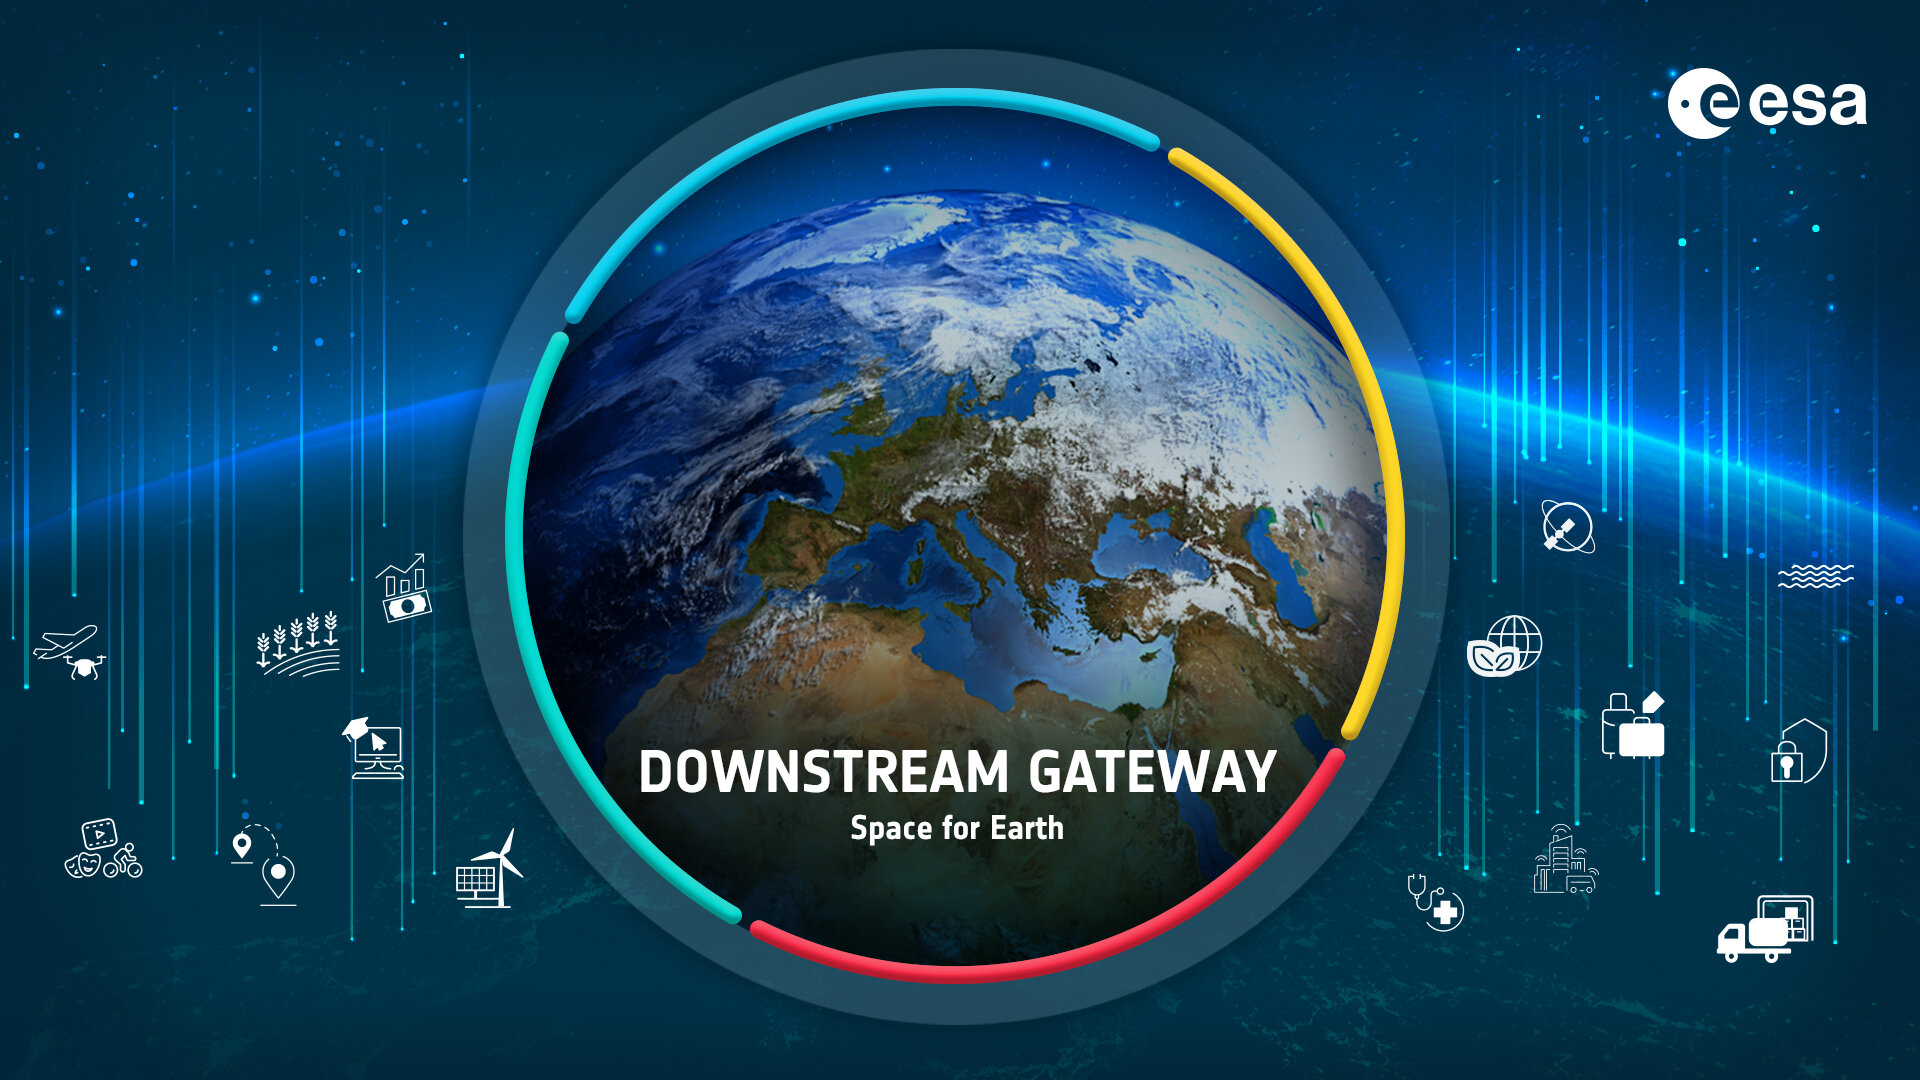 Downstream Gateway